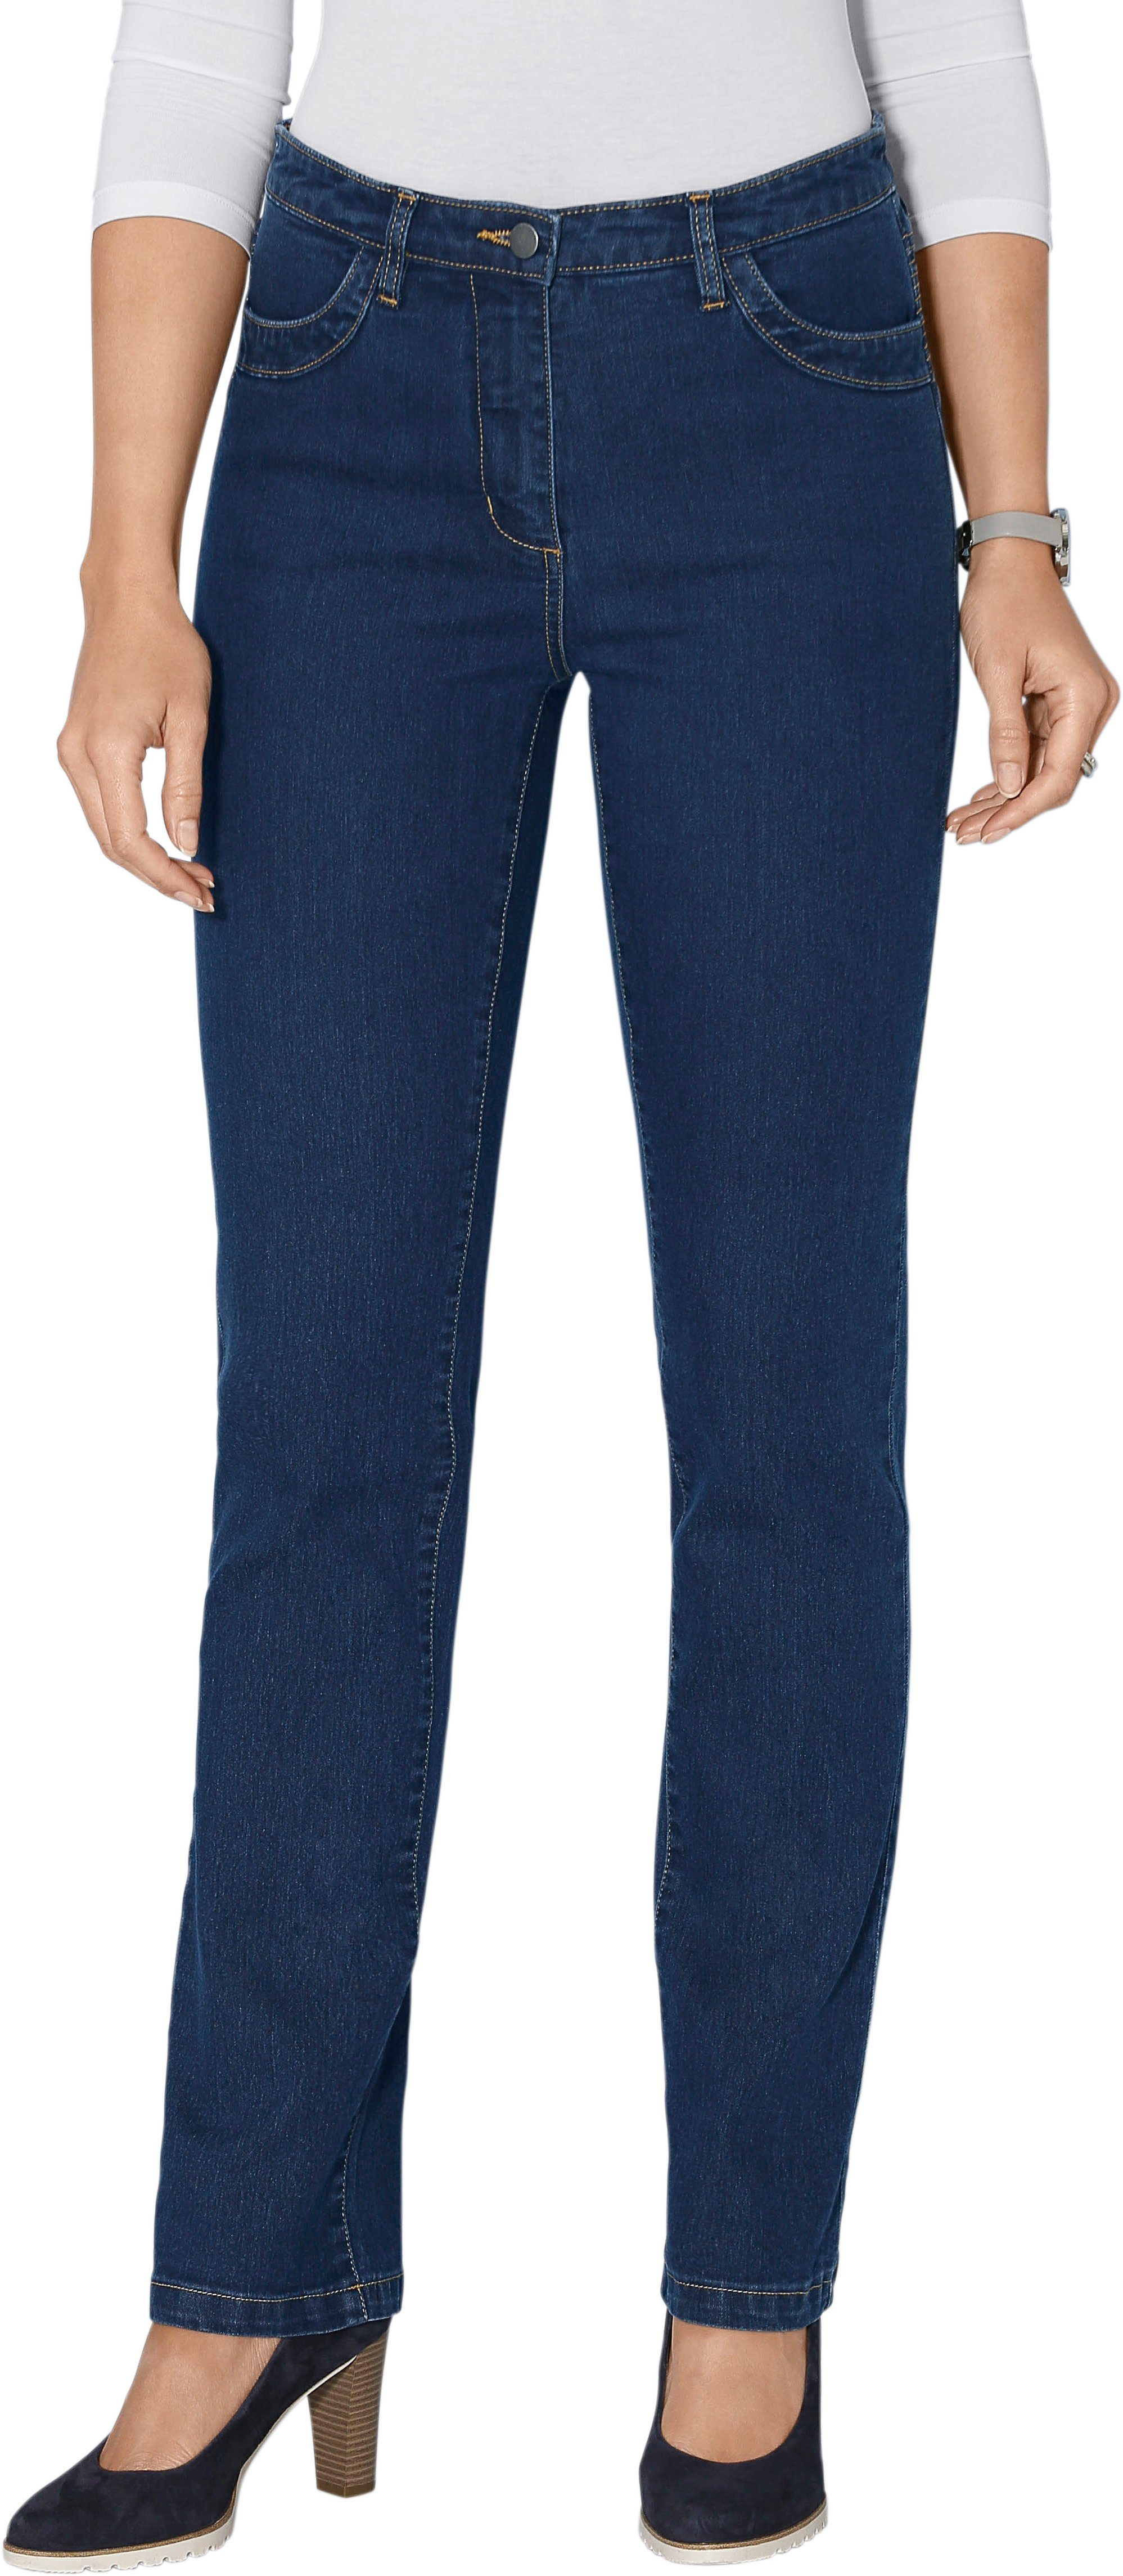 Otto - Classic Basics NU 15% KORTING: Classic Basics jeans in stretchkwaliteit